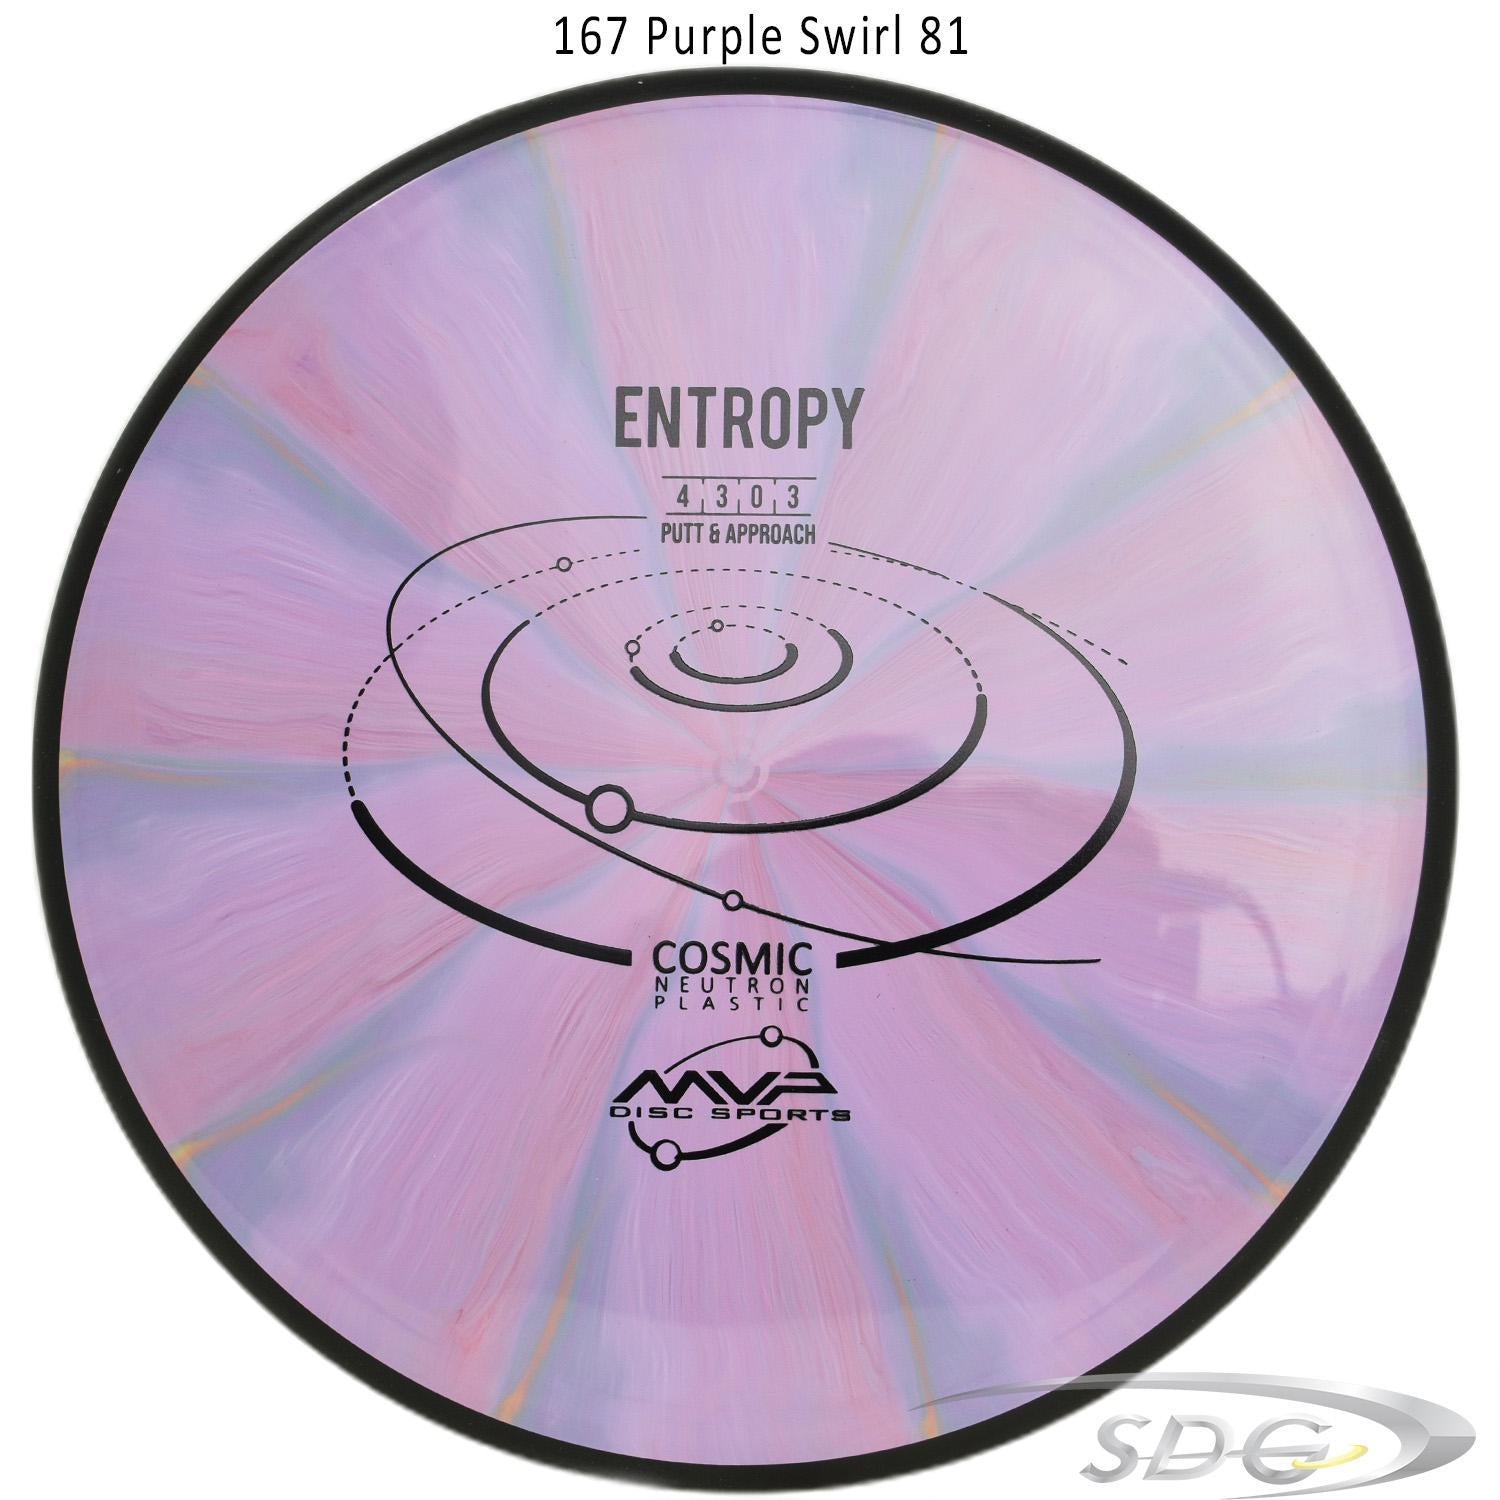 mvp-cosmic-neutron-entropy-disc-golf-putt-approach 167 Purple Swirl 81 